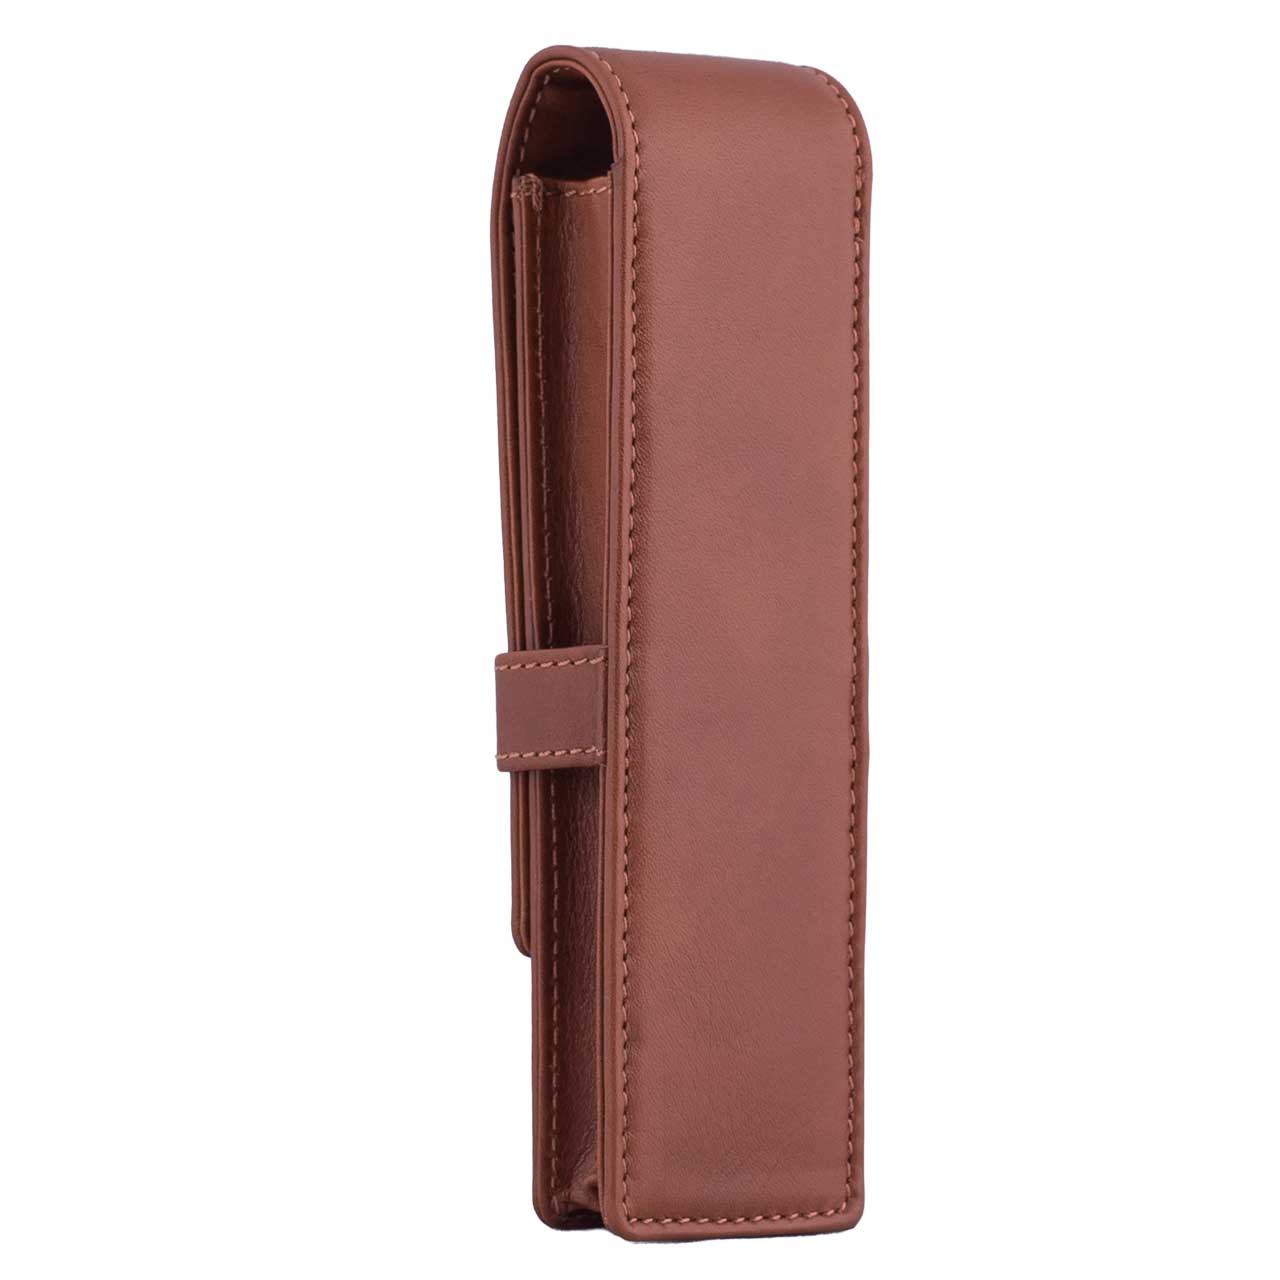 DiLoro Double Pen Case Holder in Top Quality, Full Grain Nappa Leather - Bugatti Tan, Partial Back View